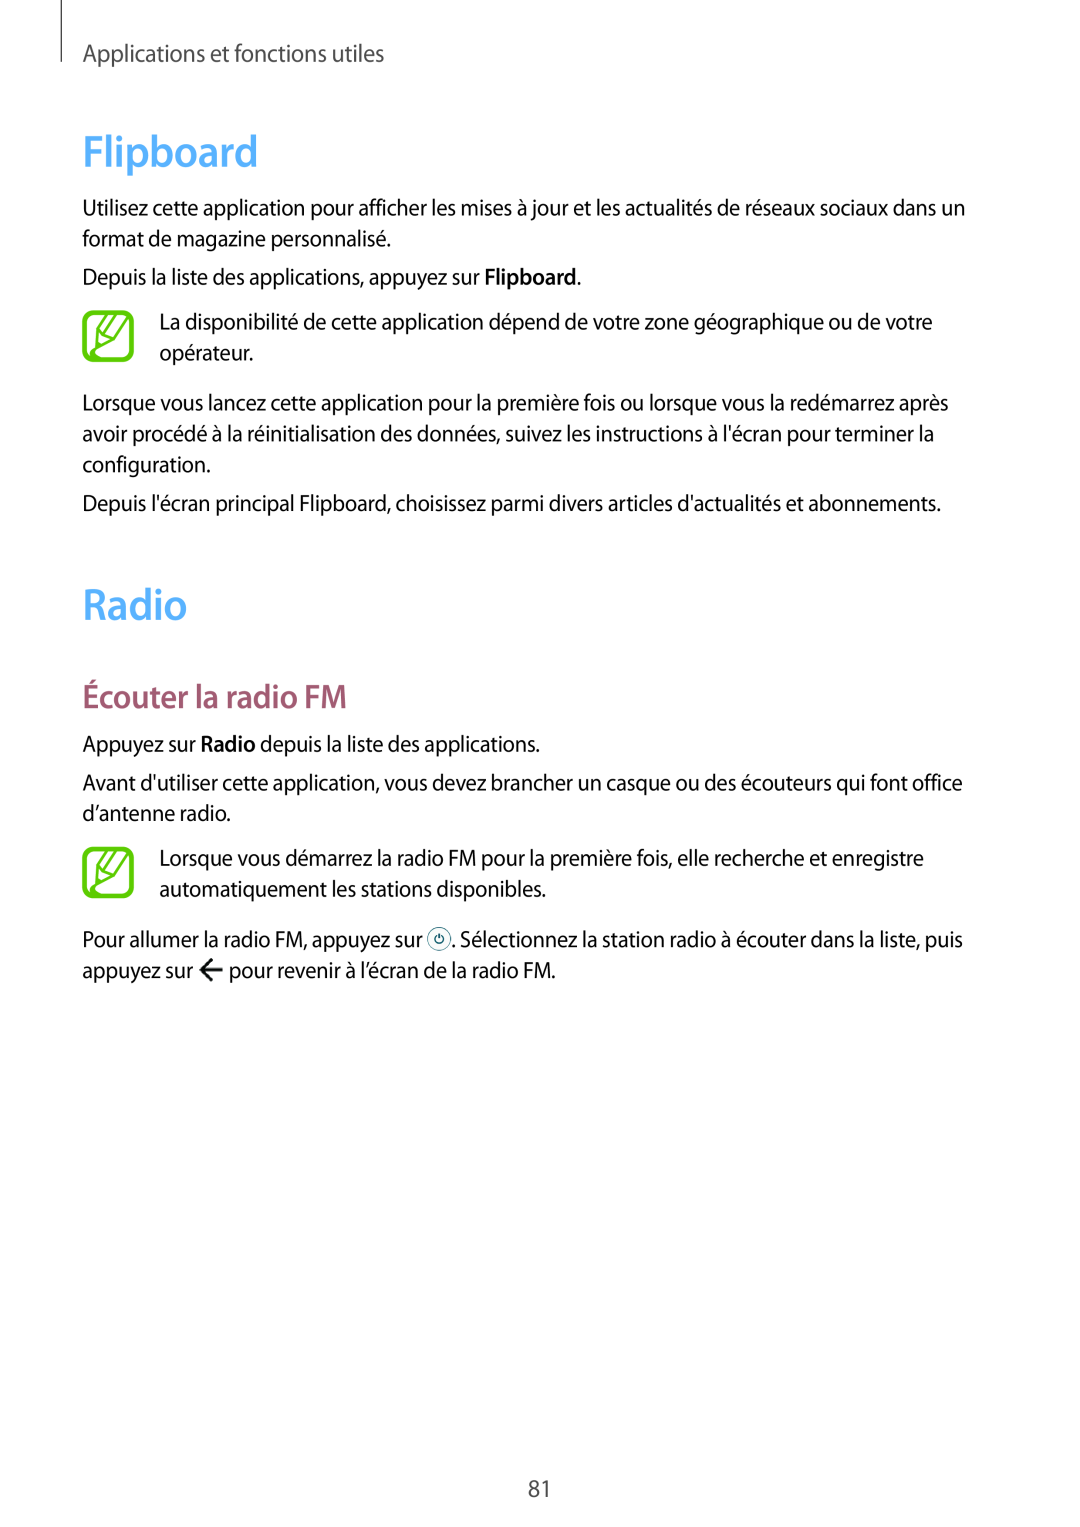 Samsung SM-A300FZKUBOG, SM-A300FZSUXEF manual Flipboard, Radio, Écouter la radio FM, Applications et fonctions utiles 